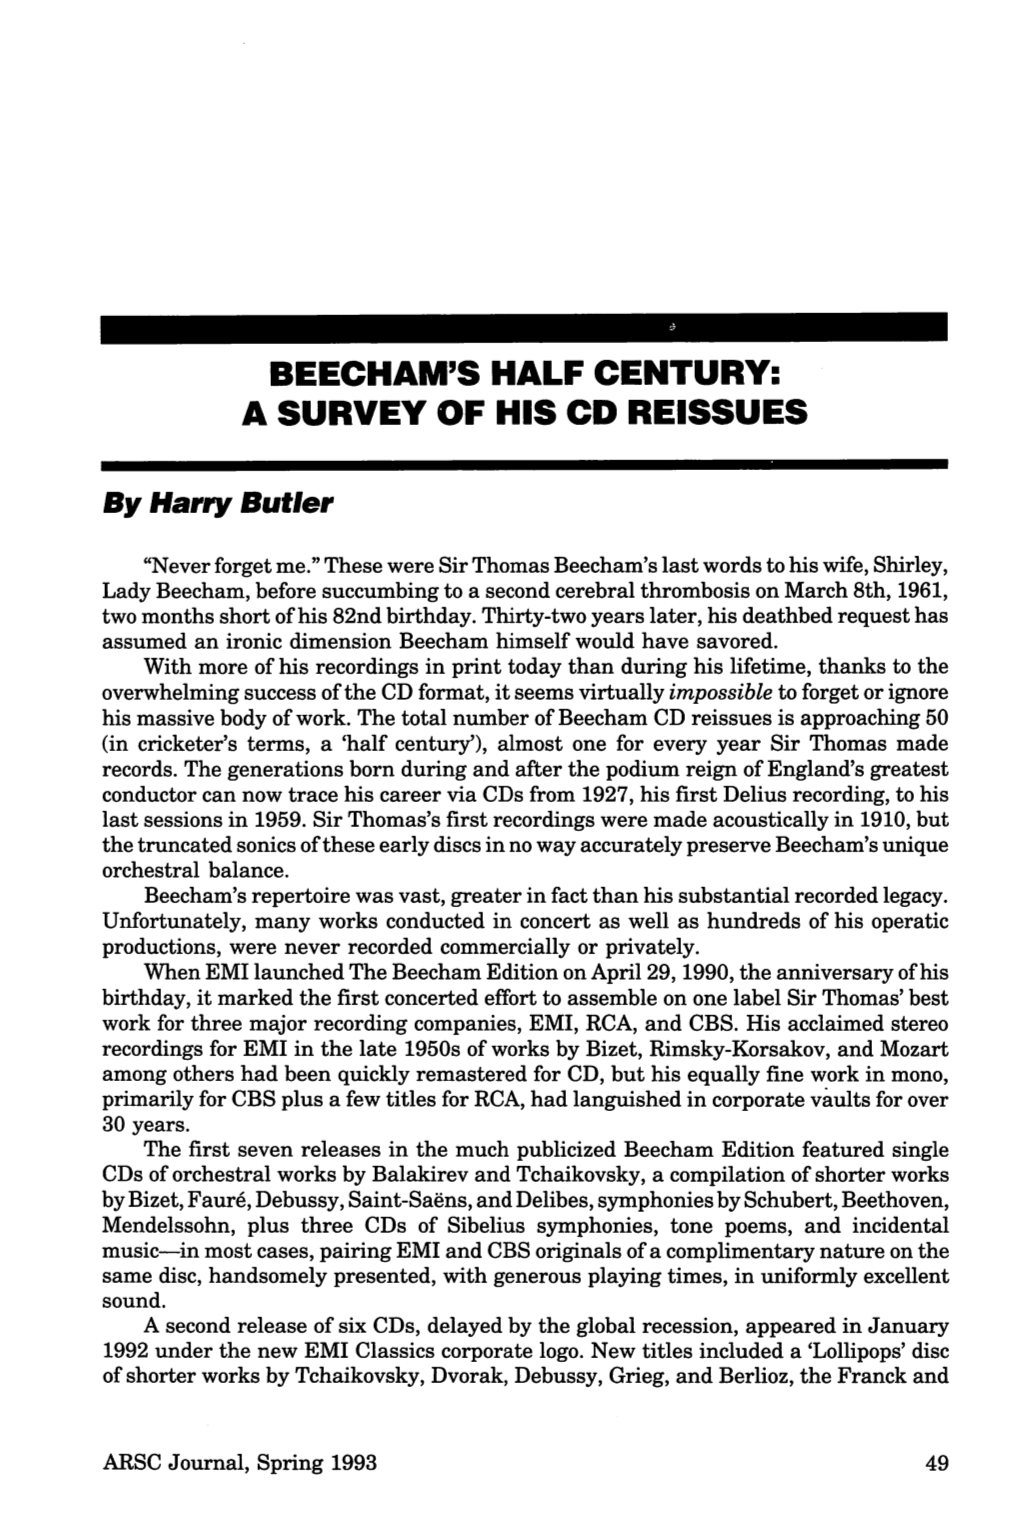 Beecham's Half Century: a Survey of His Cd Reissues